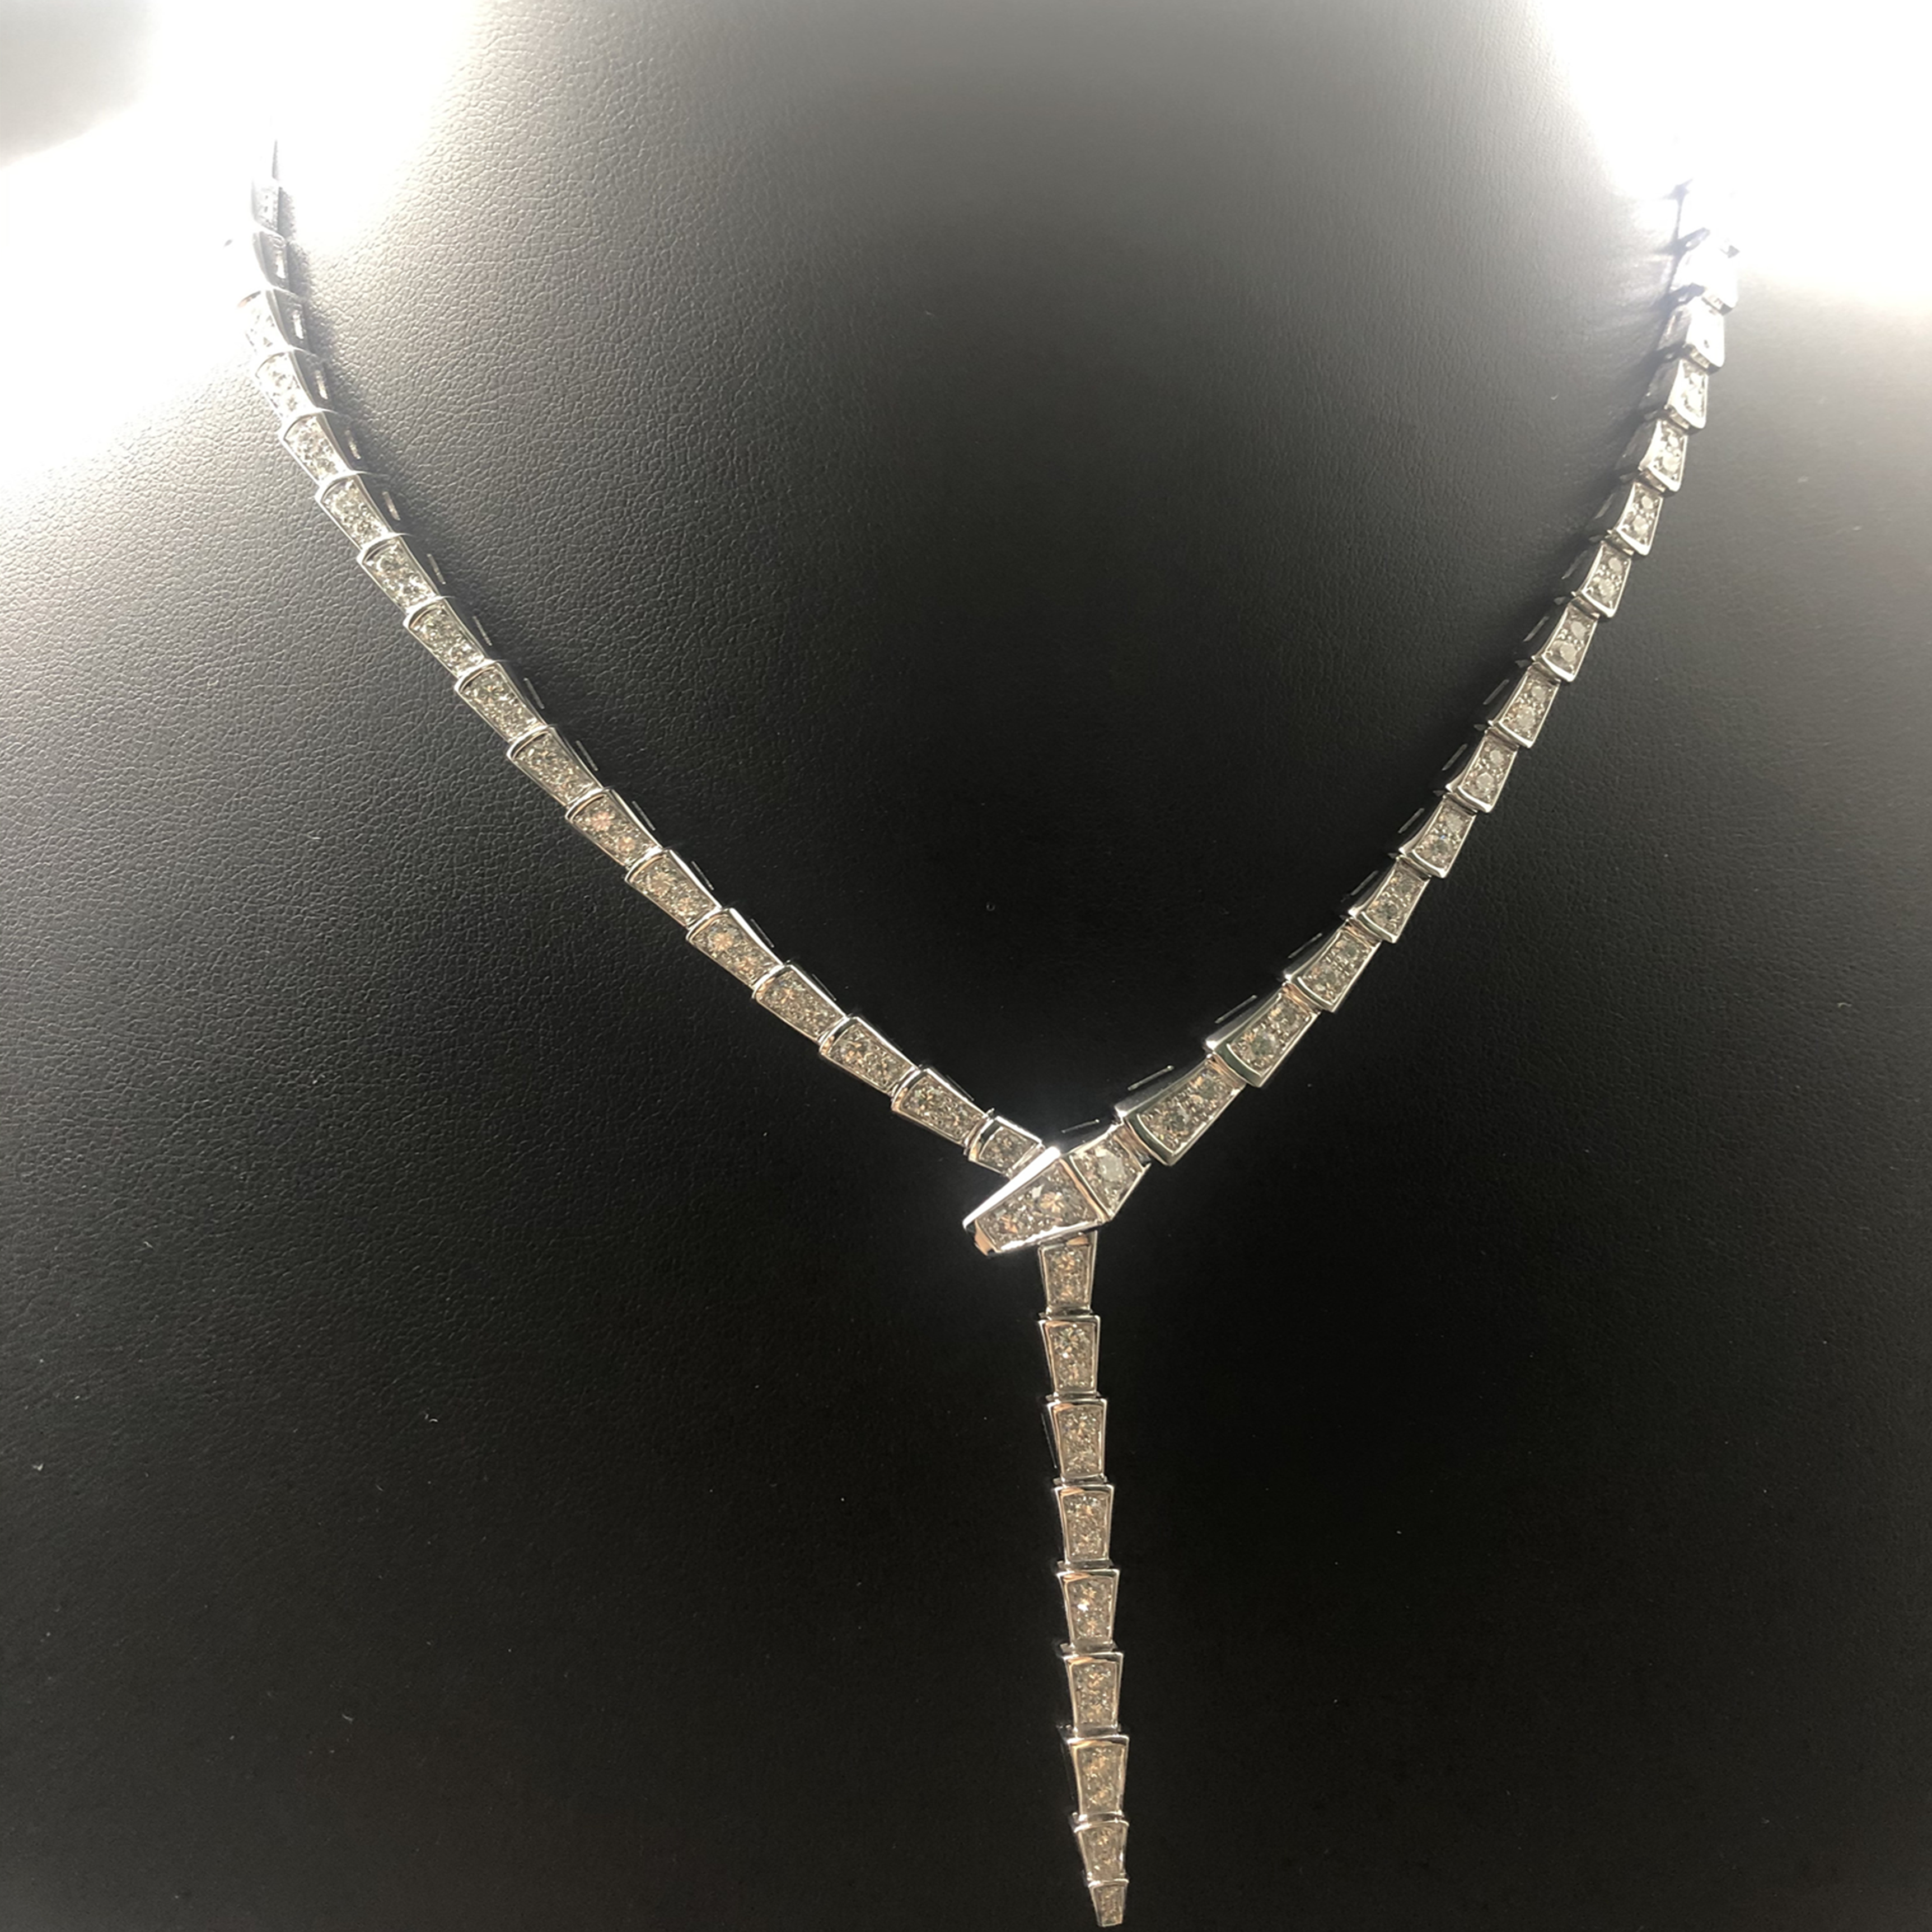 Collier Bvlgari Serpenti Viper sur mesure en or blanc 18 carats avec pavé de diamants